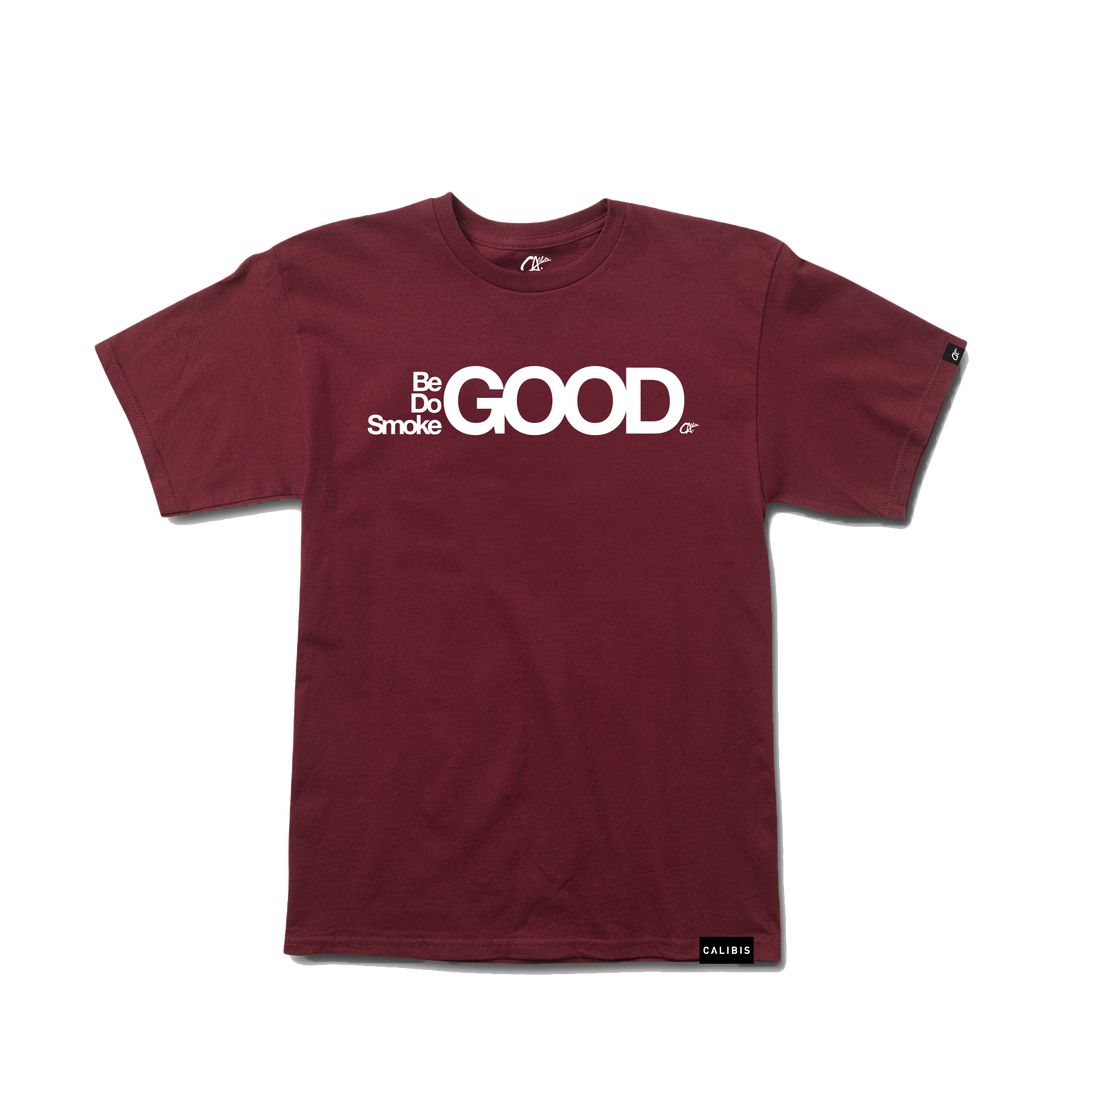 The Good T-Shirt